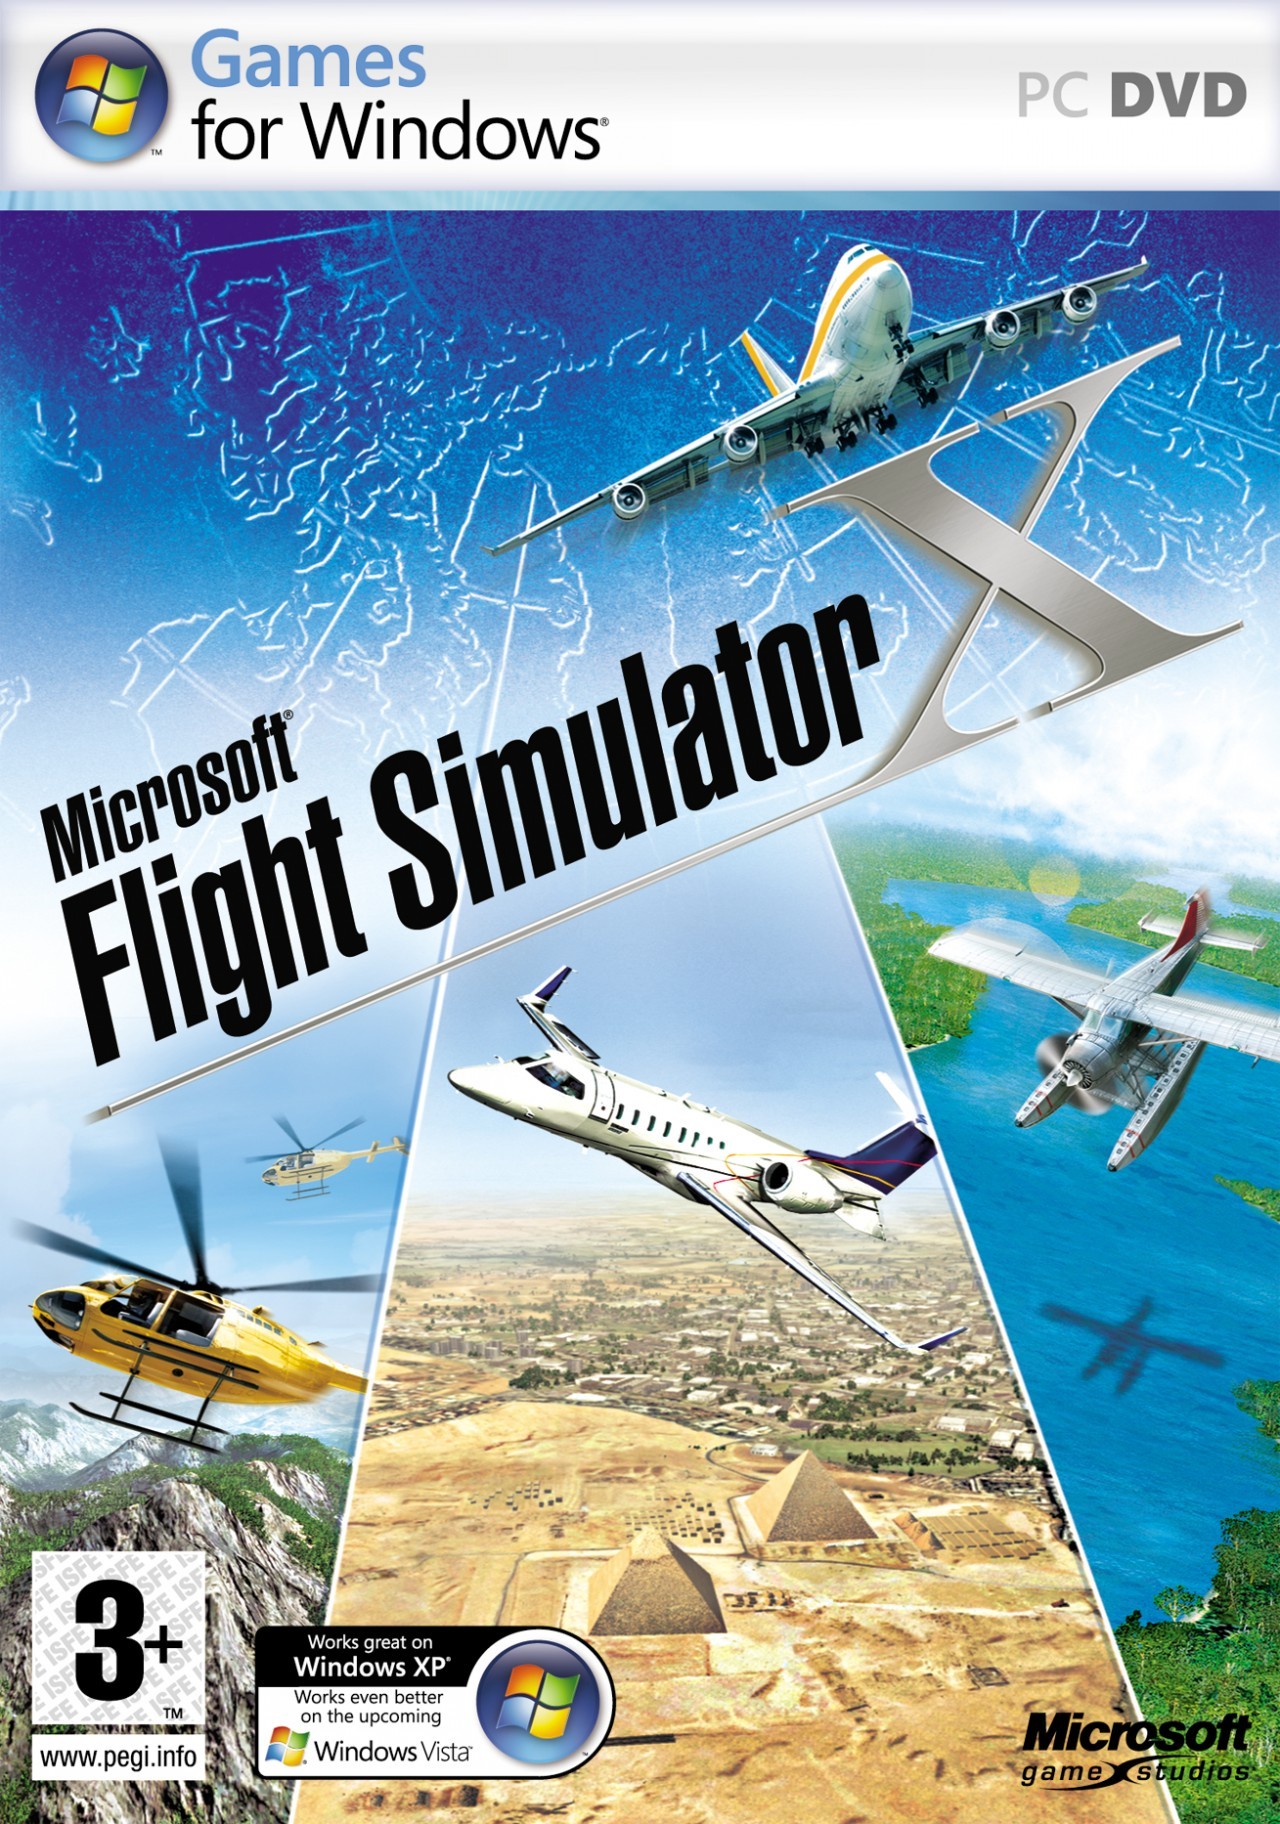 Free Flight Simulator Downloads For Pc